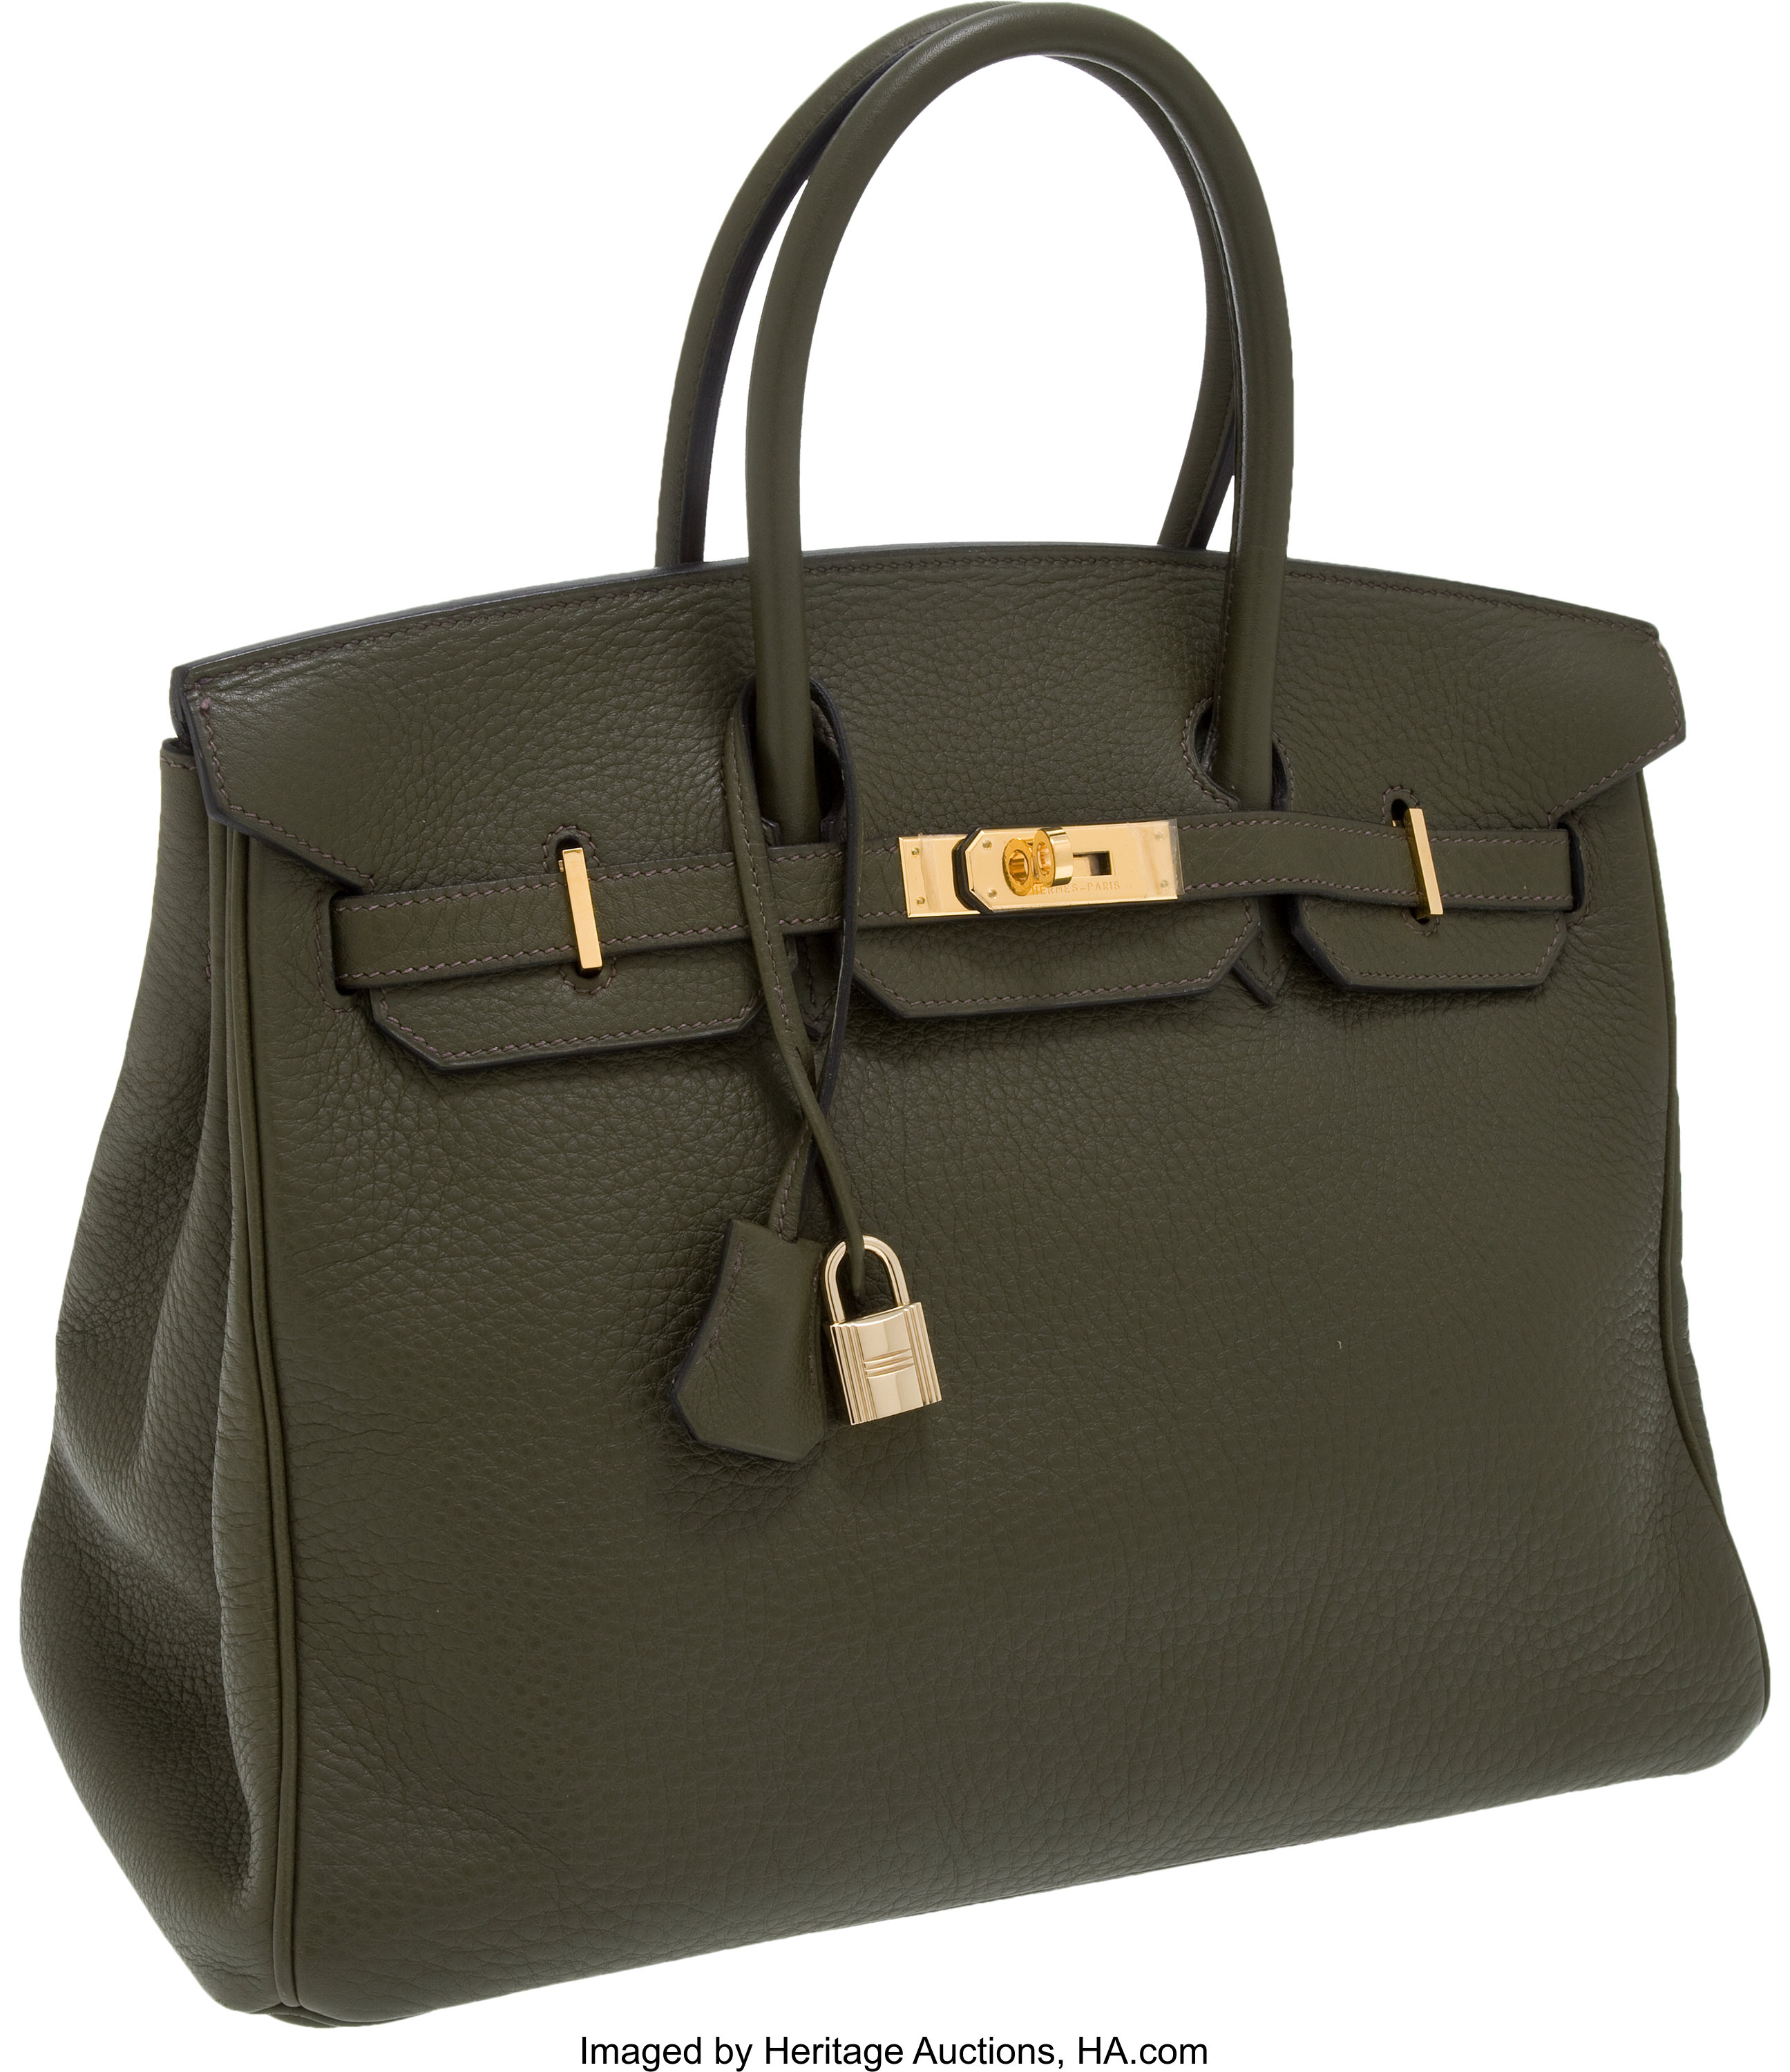 Hermes 35cm Vert Olive Clemence Leather Birkin Bag with Gold